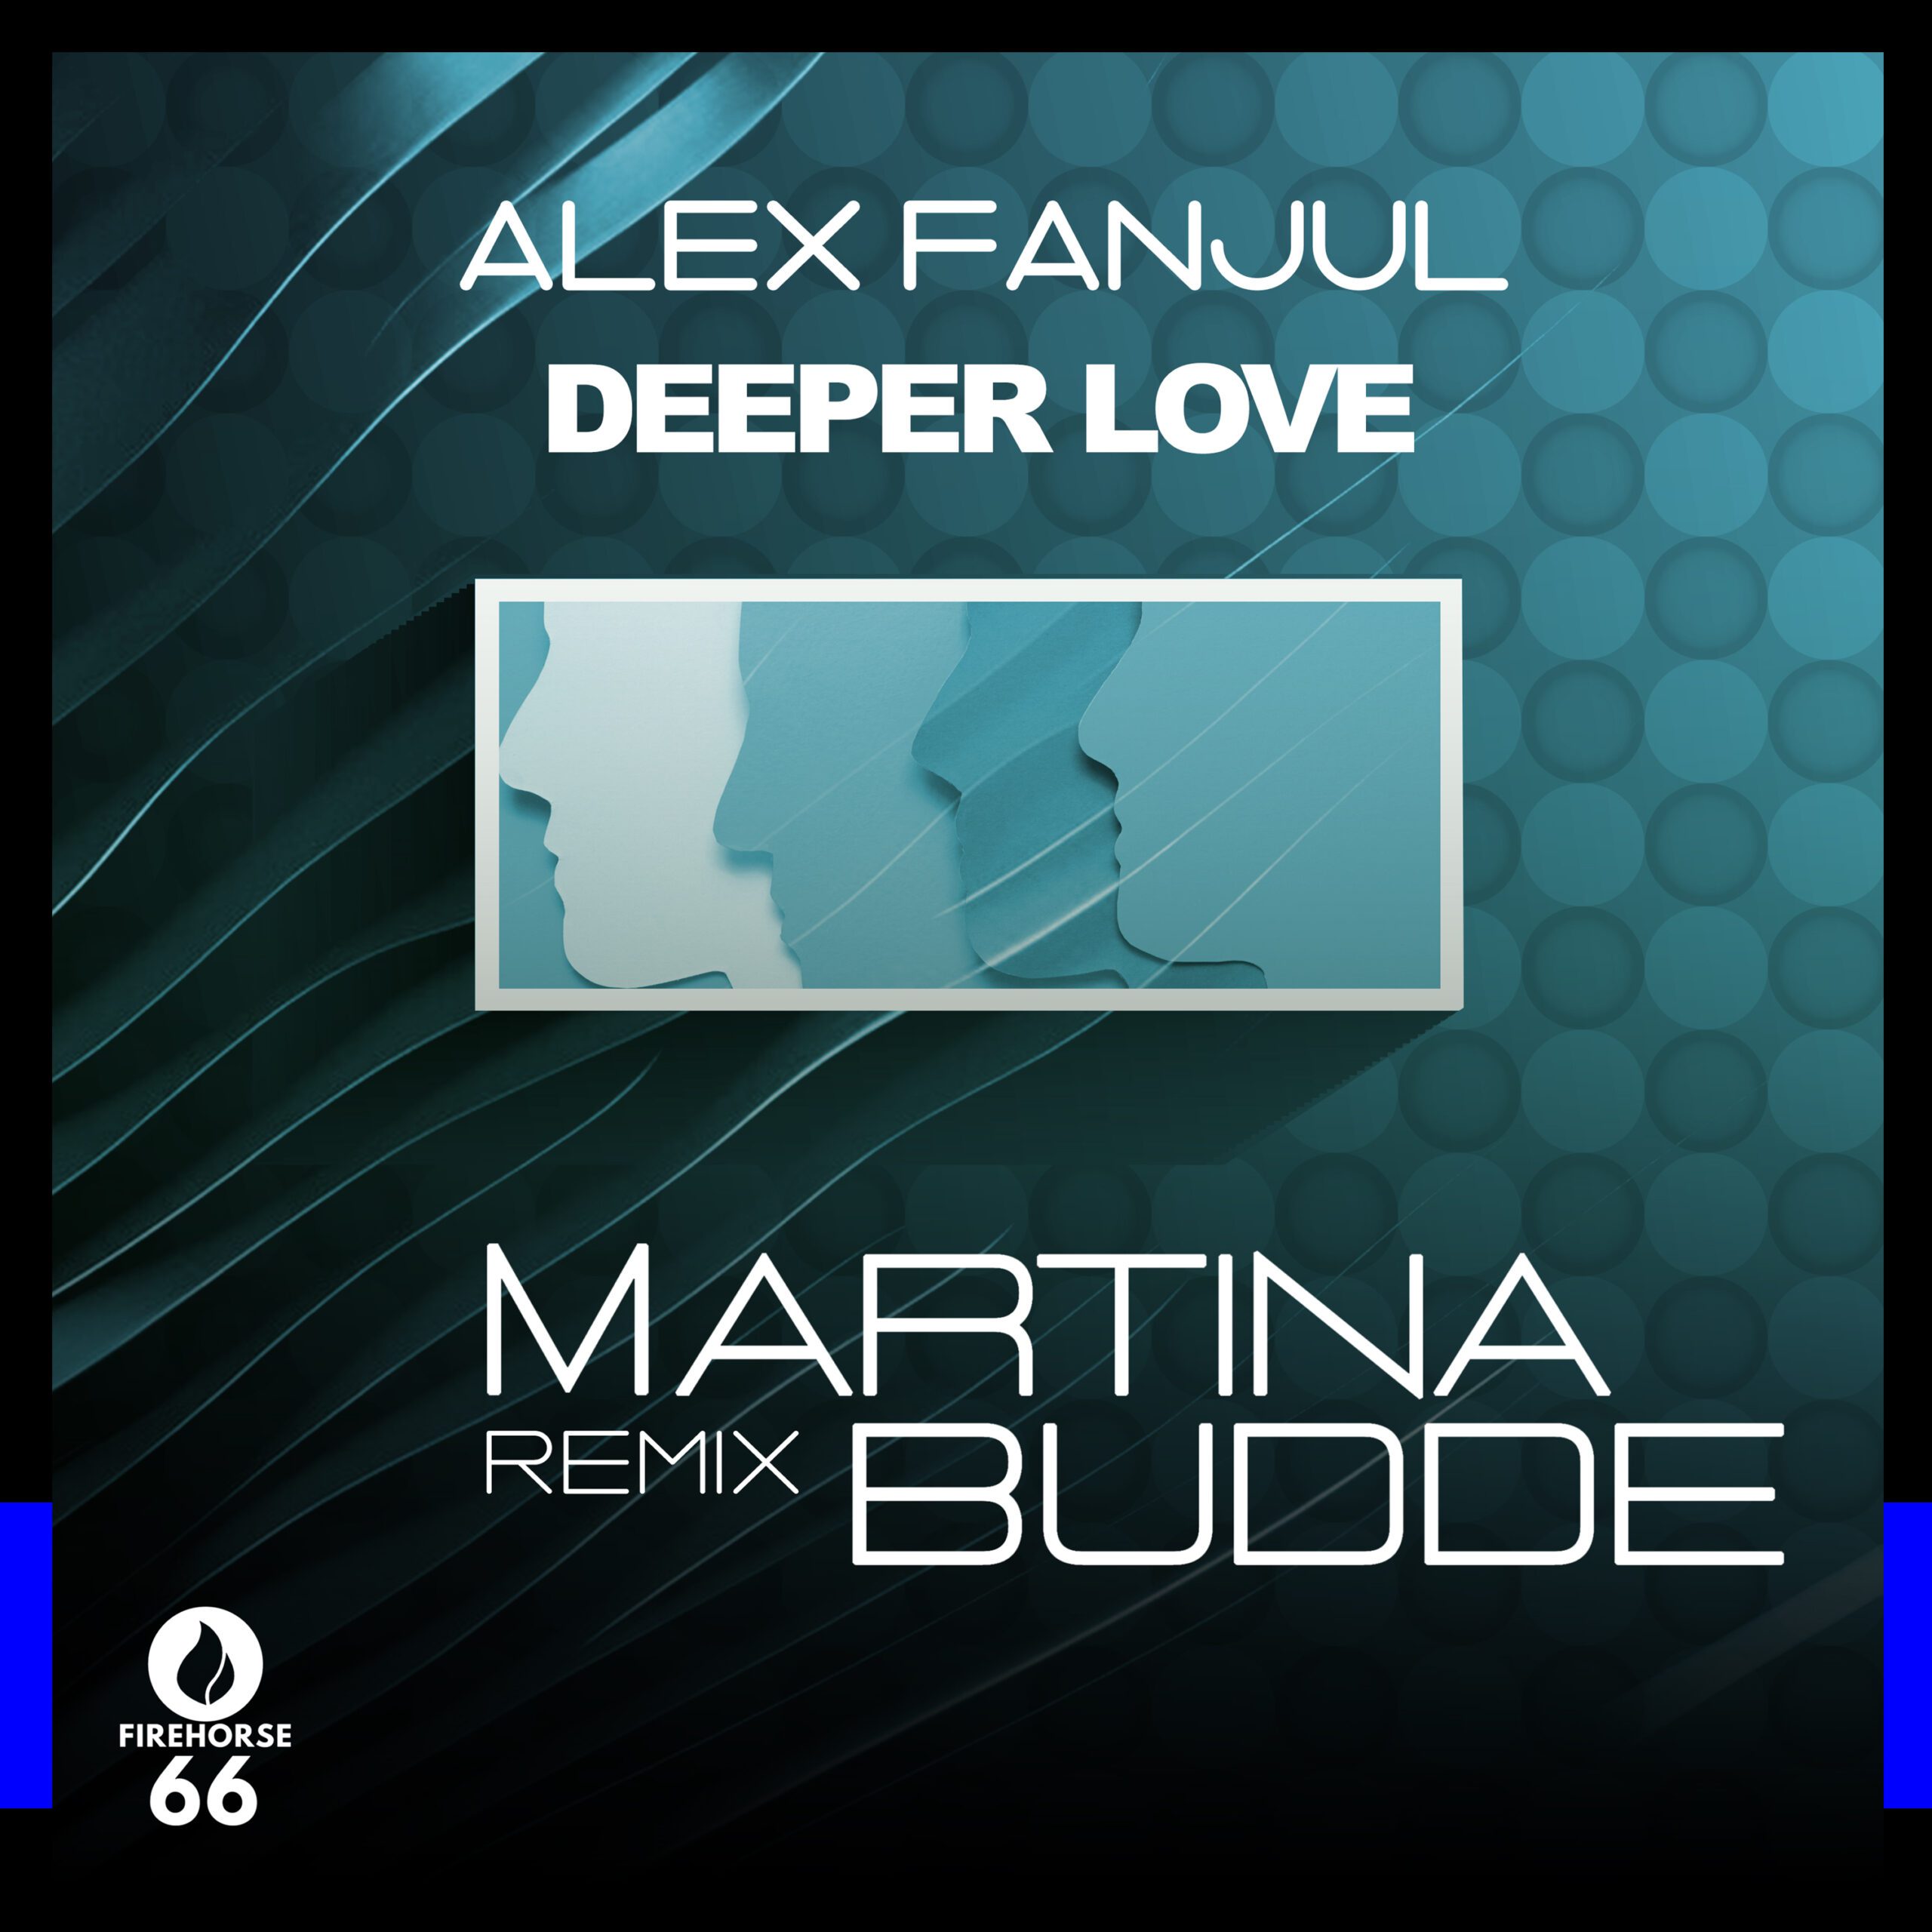 Alex Fanjul - Deeper Love (Martina Budde Remix)